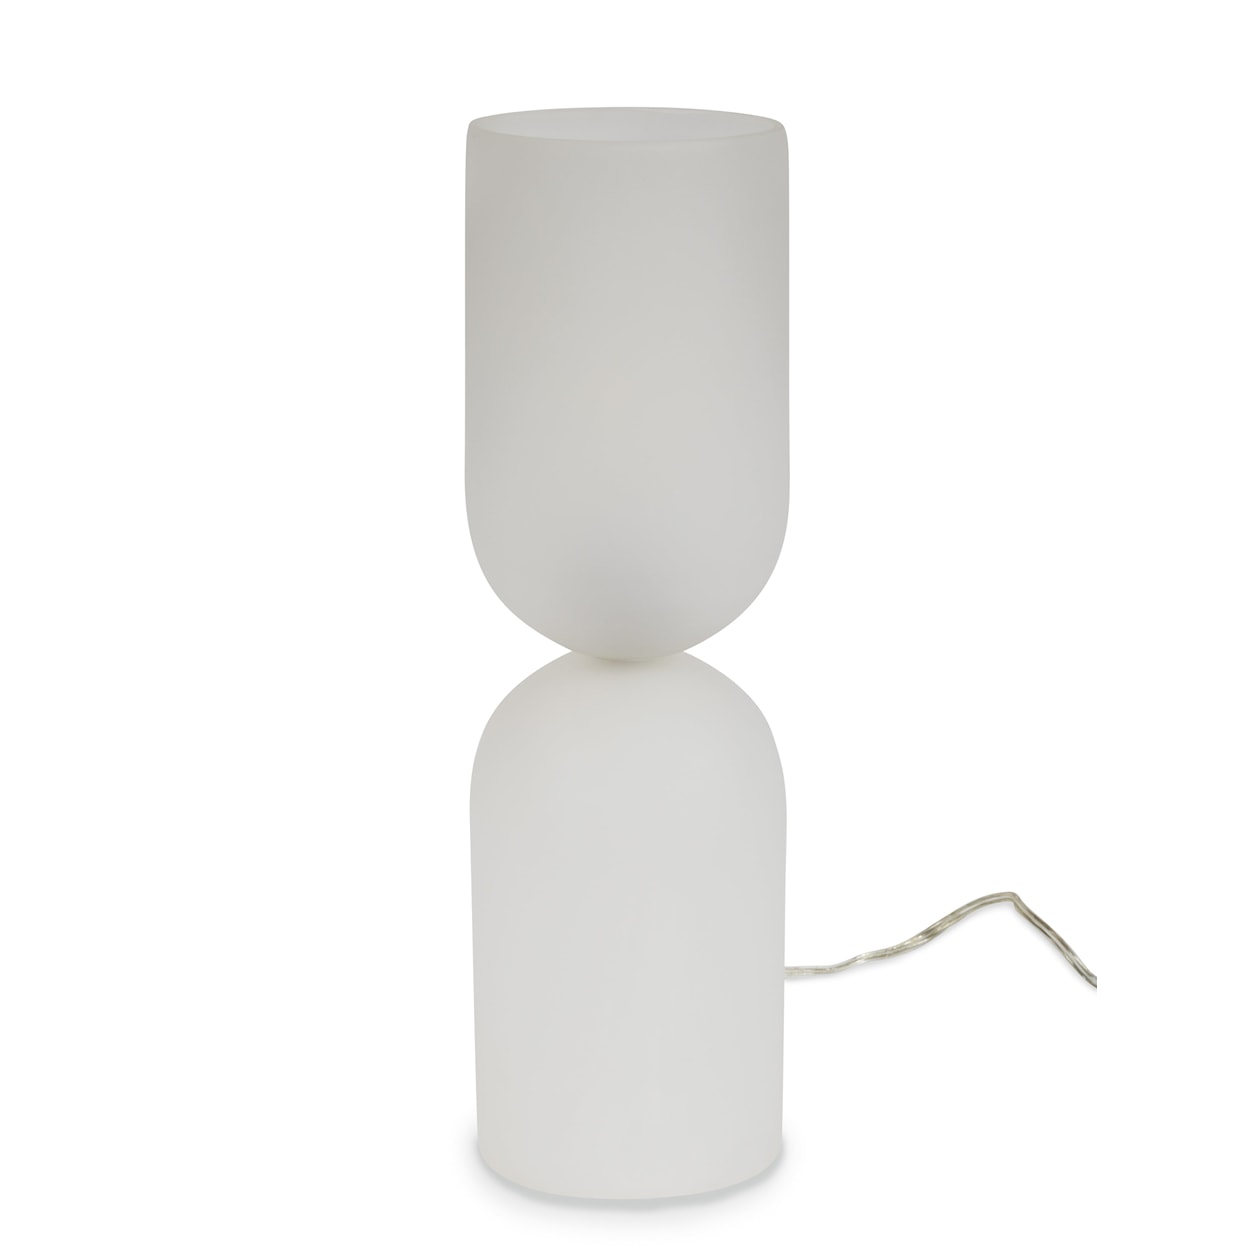 BOBO Intriguing Objects BOBO Intriguing Objects Smooth White Luxury Lamp